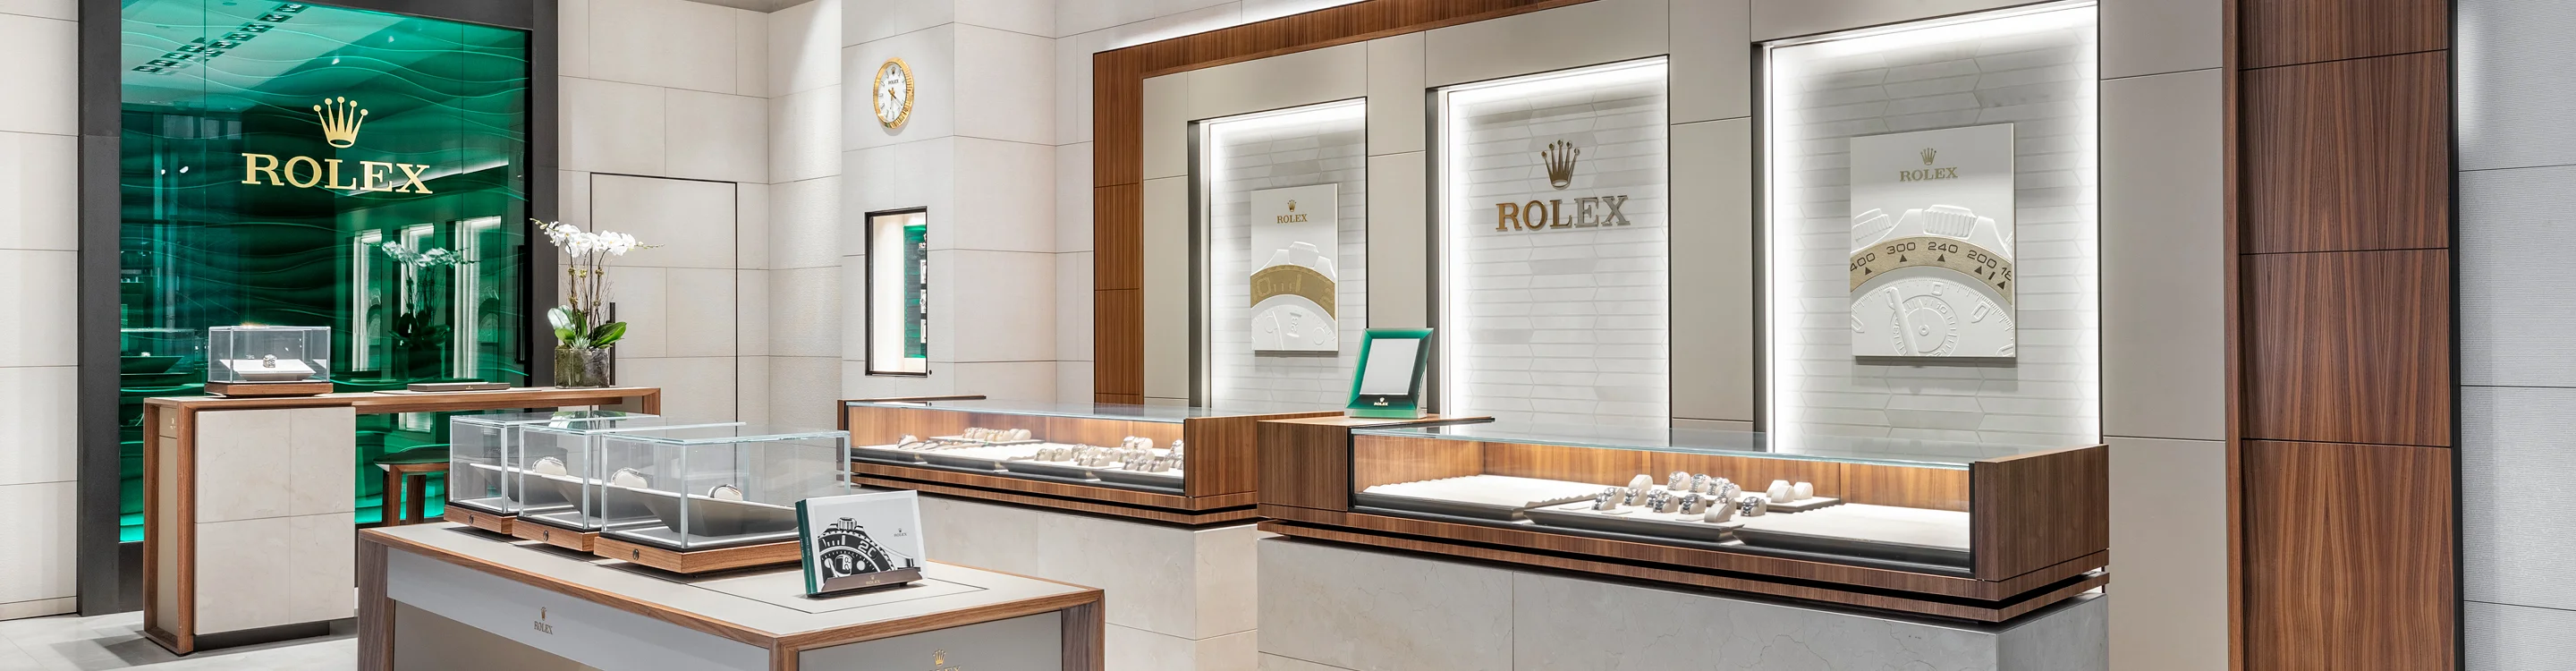 Rolex at William Barthman